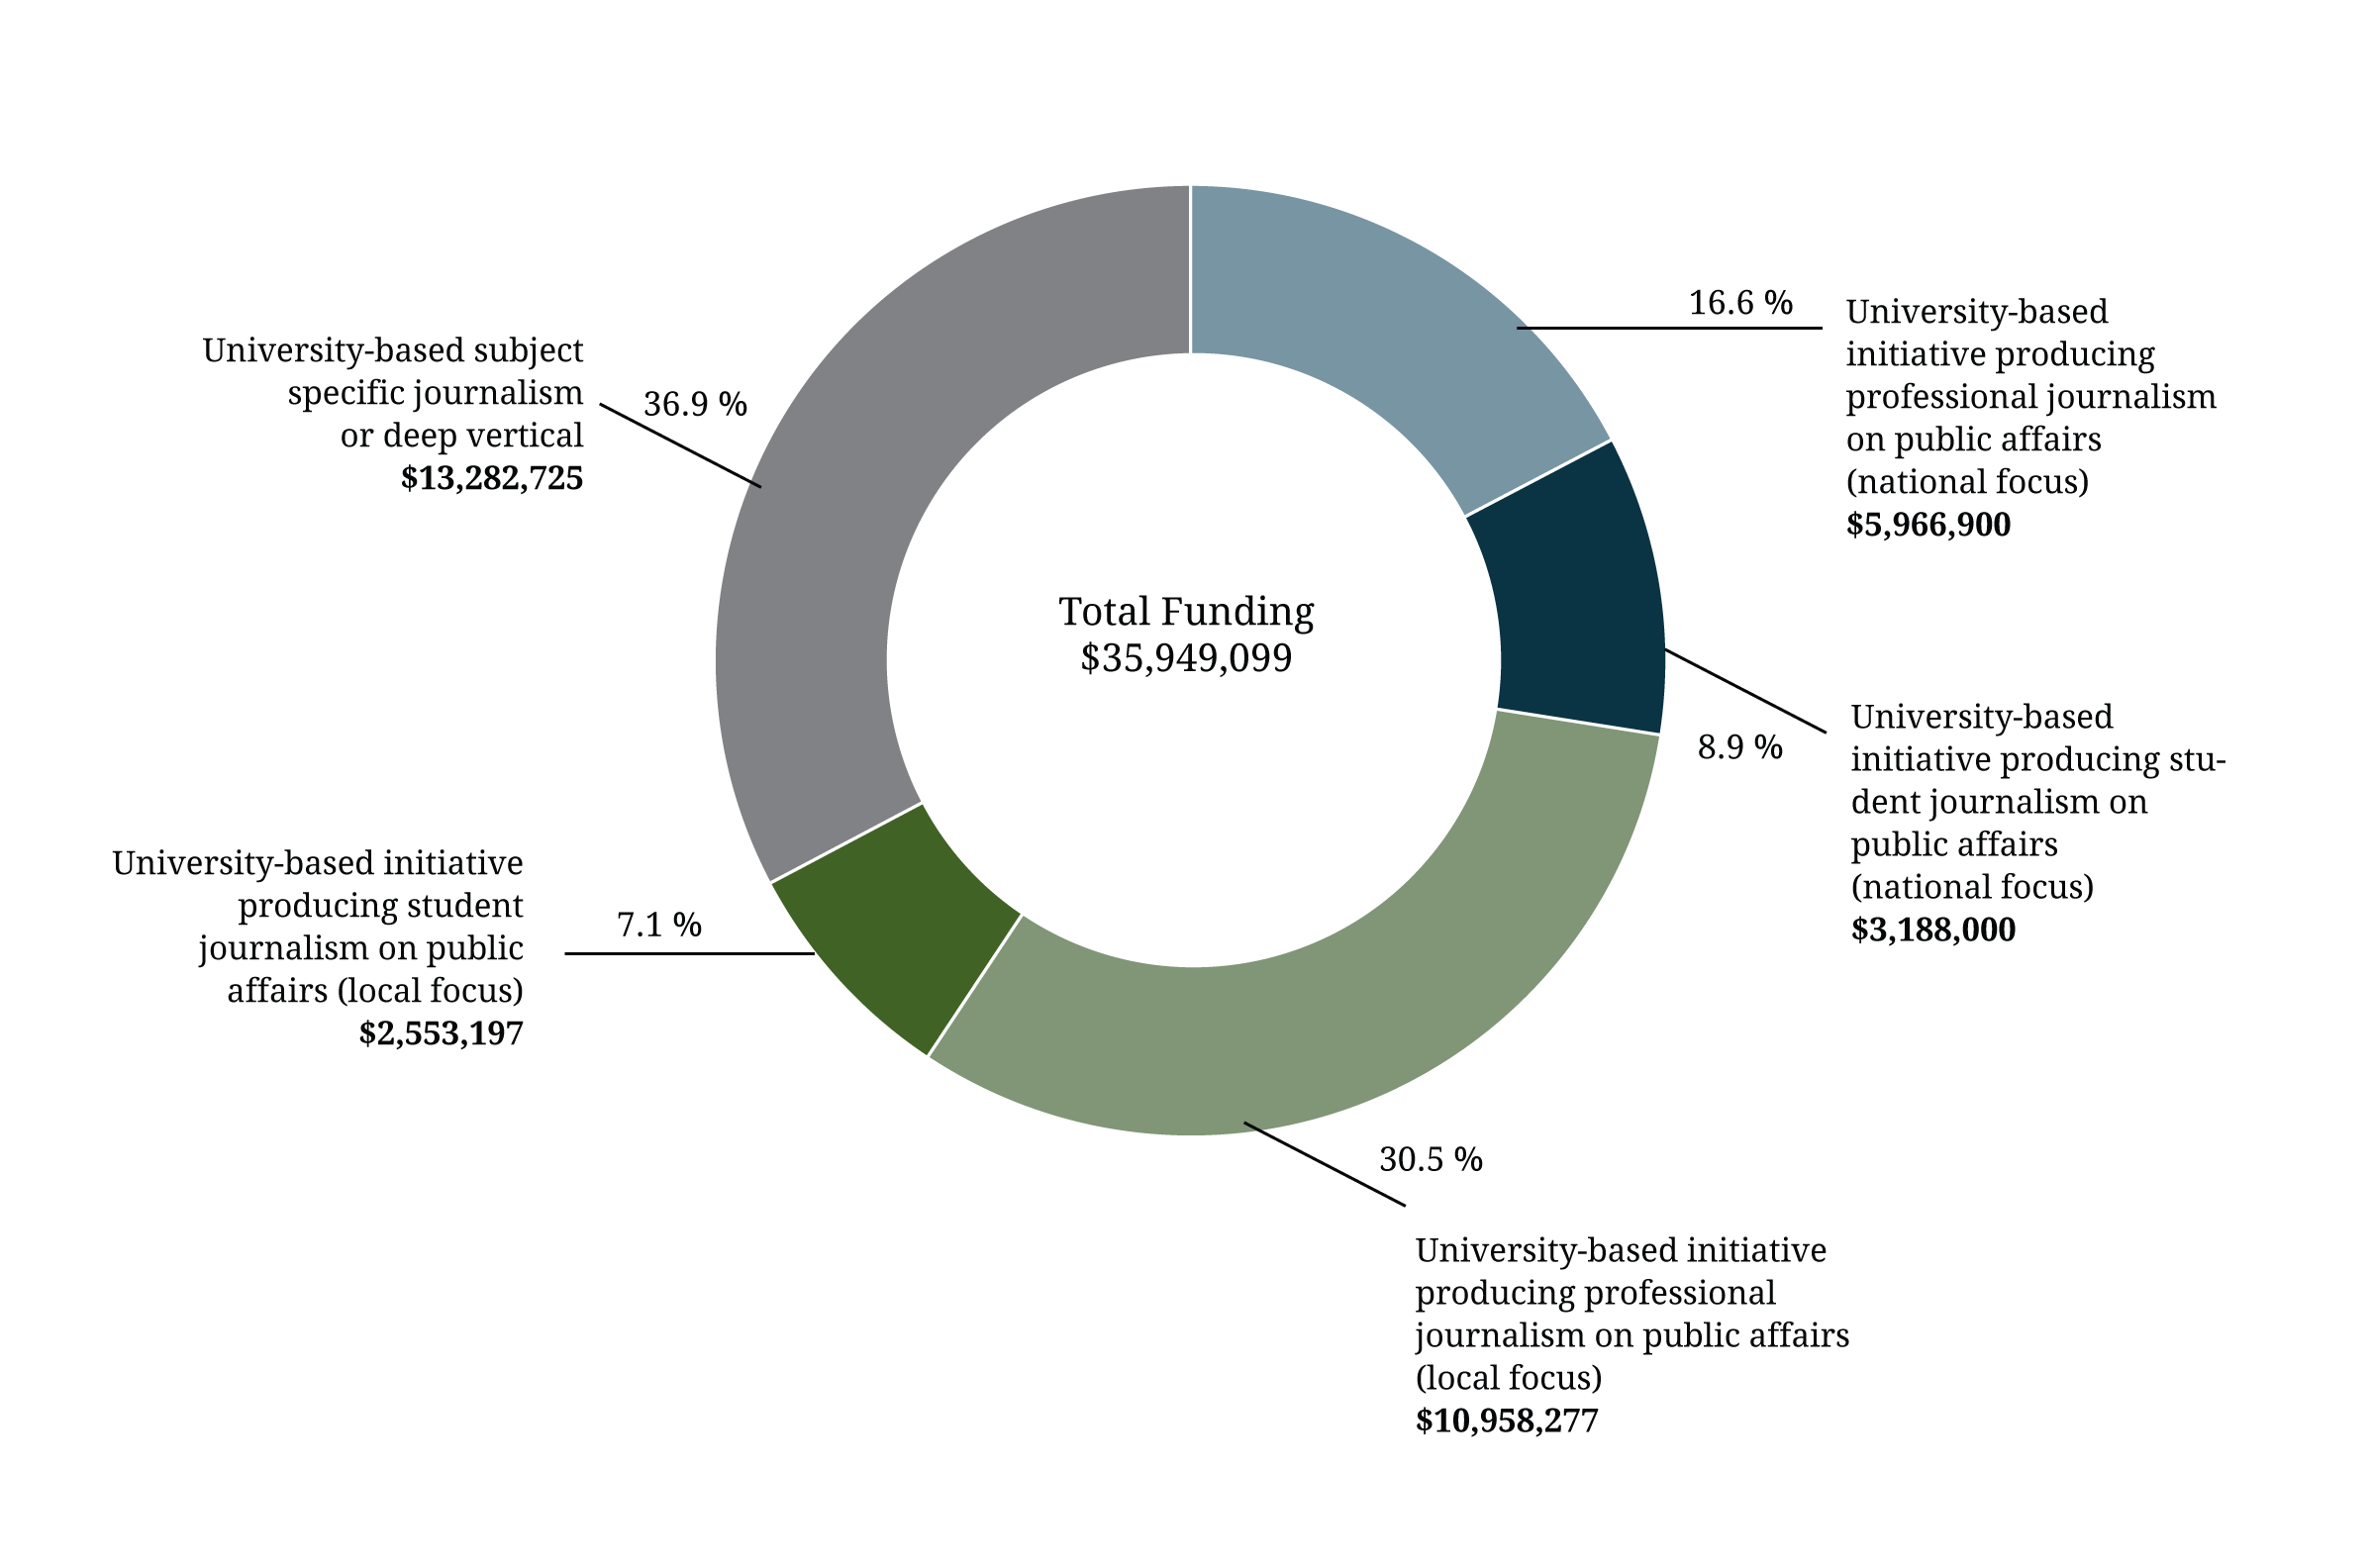 Figure 9. U.S. foundation funding for university-based journalism initiatives, 2010-2015